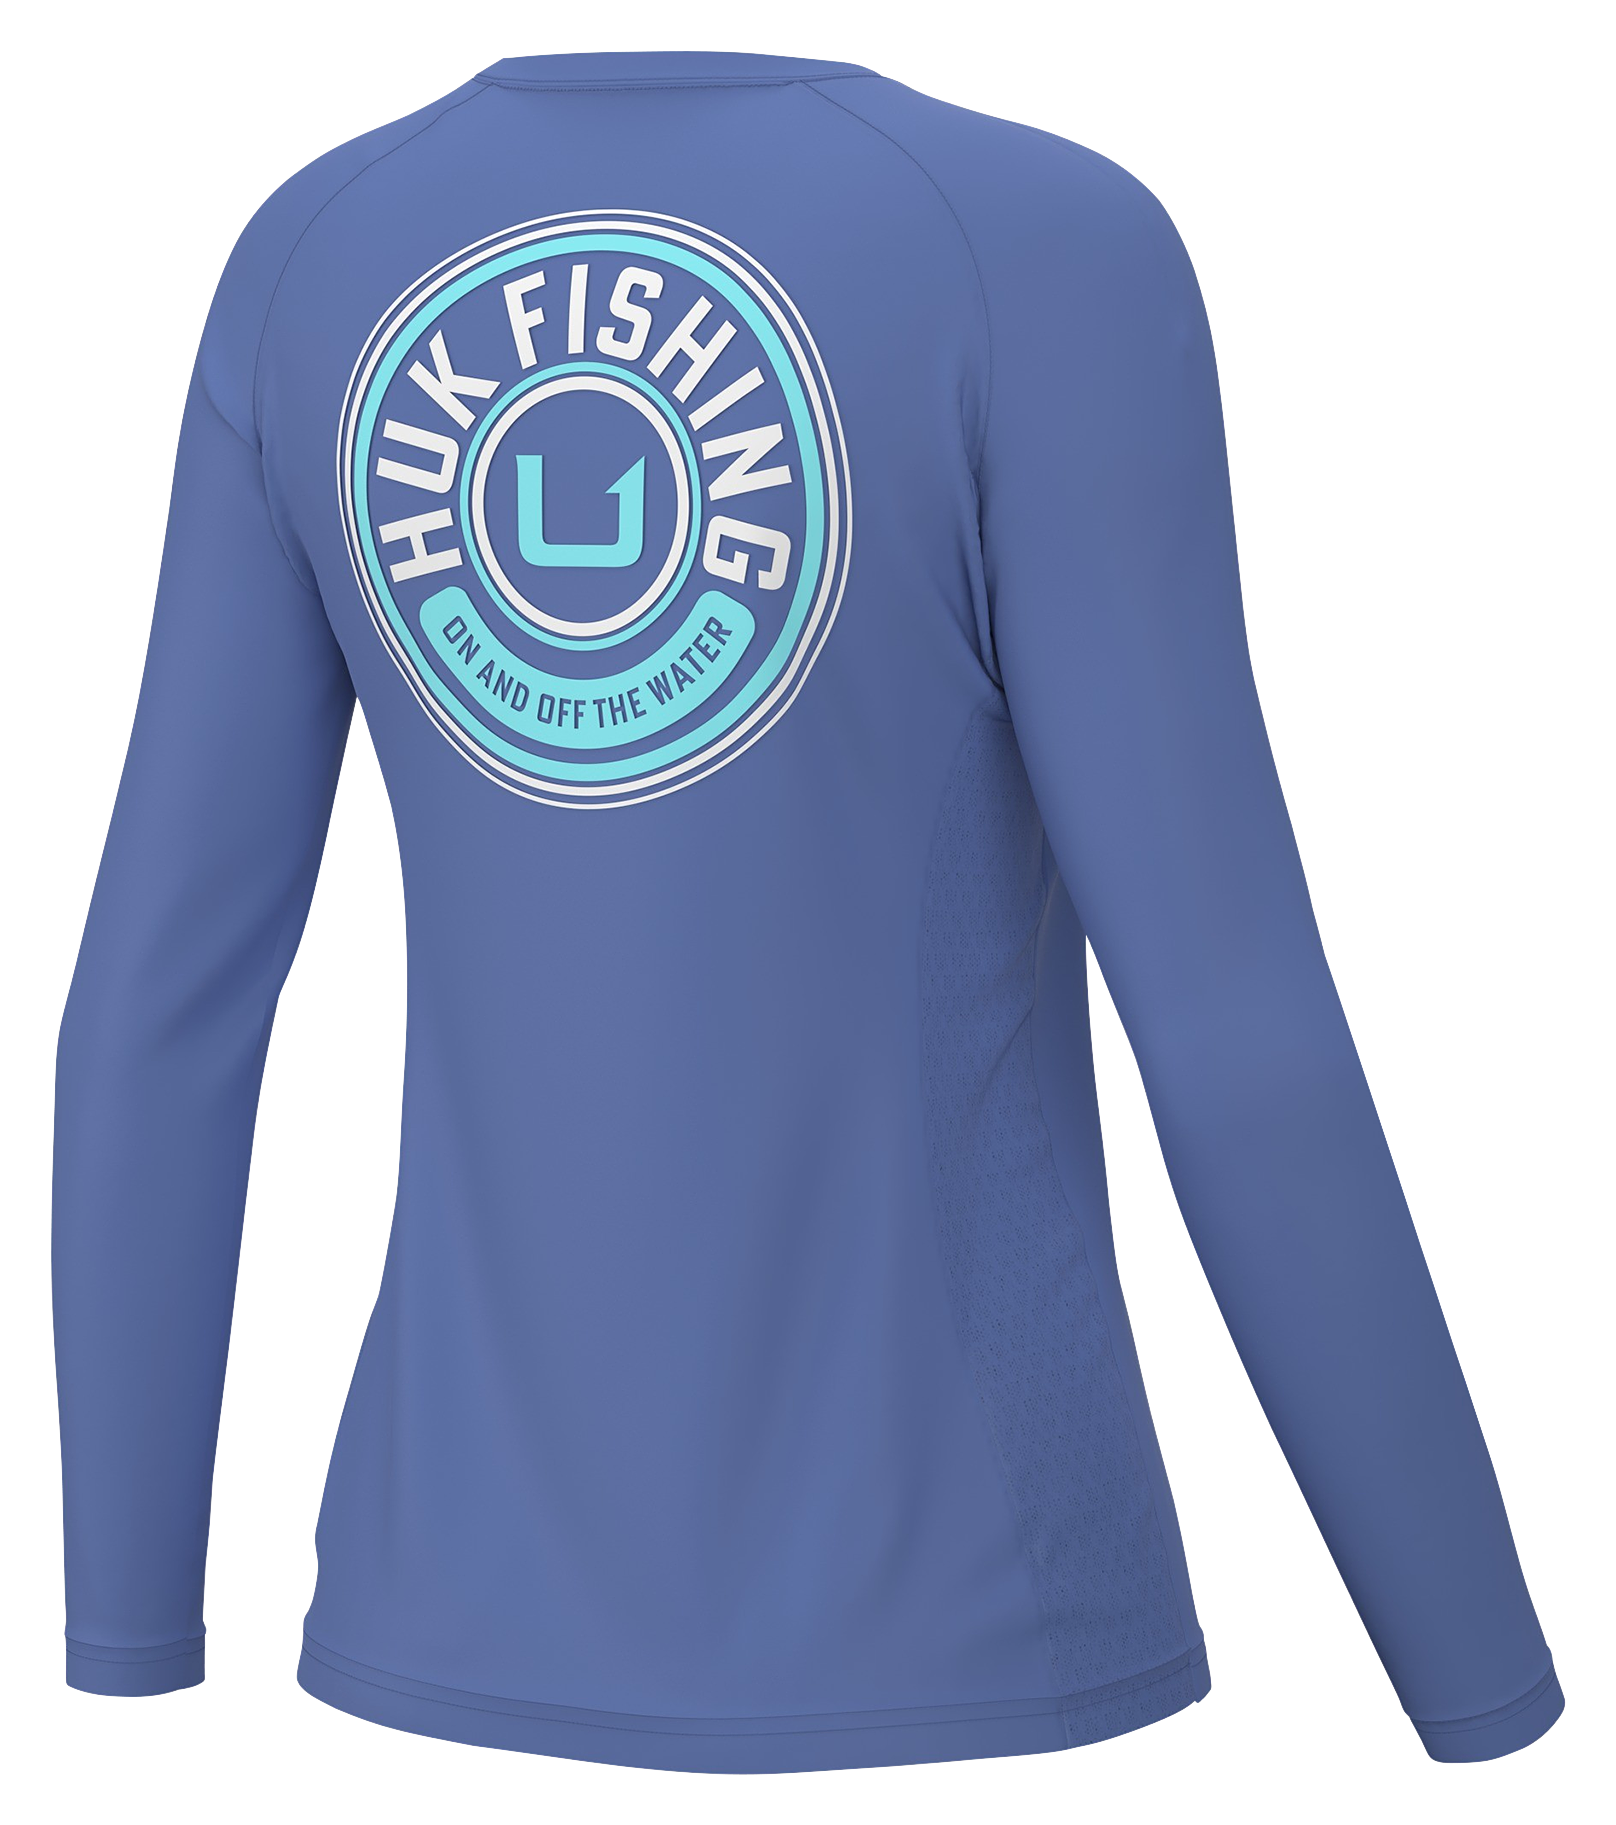 Outdoor Shirts HUK Fishing Shirts Spf 50 Moisture Wicking